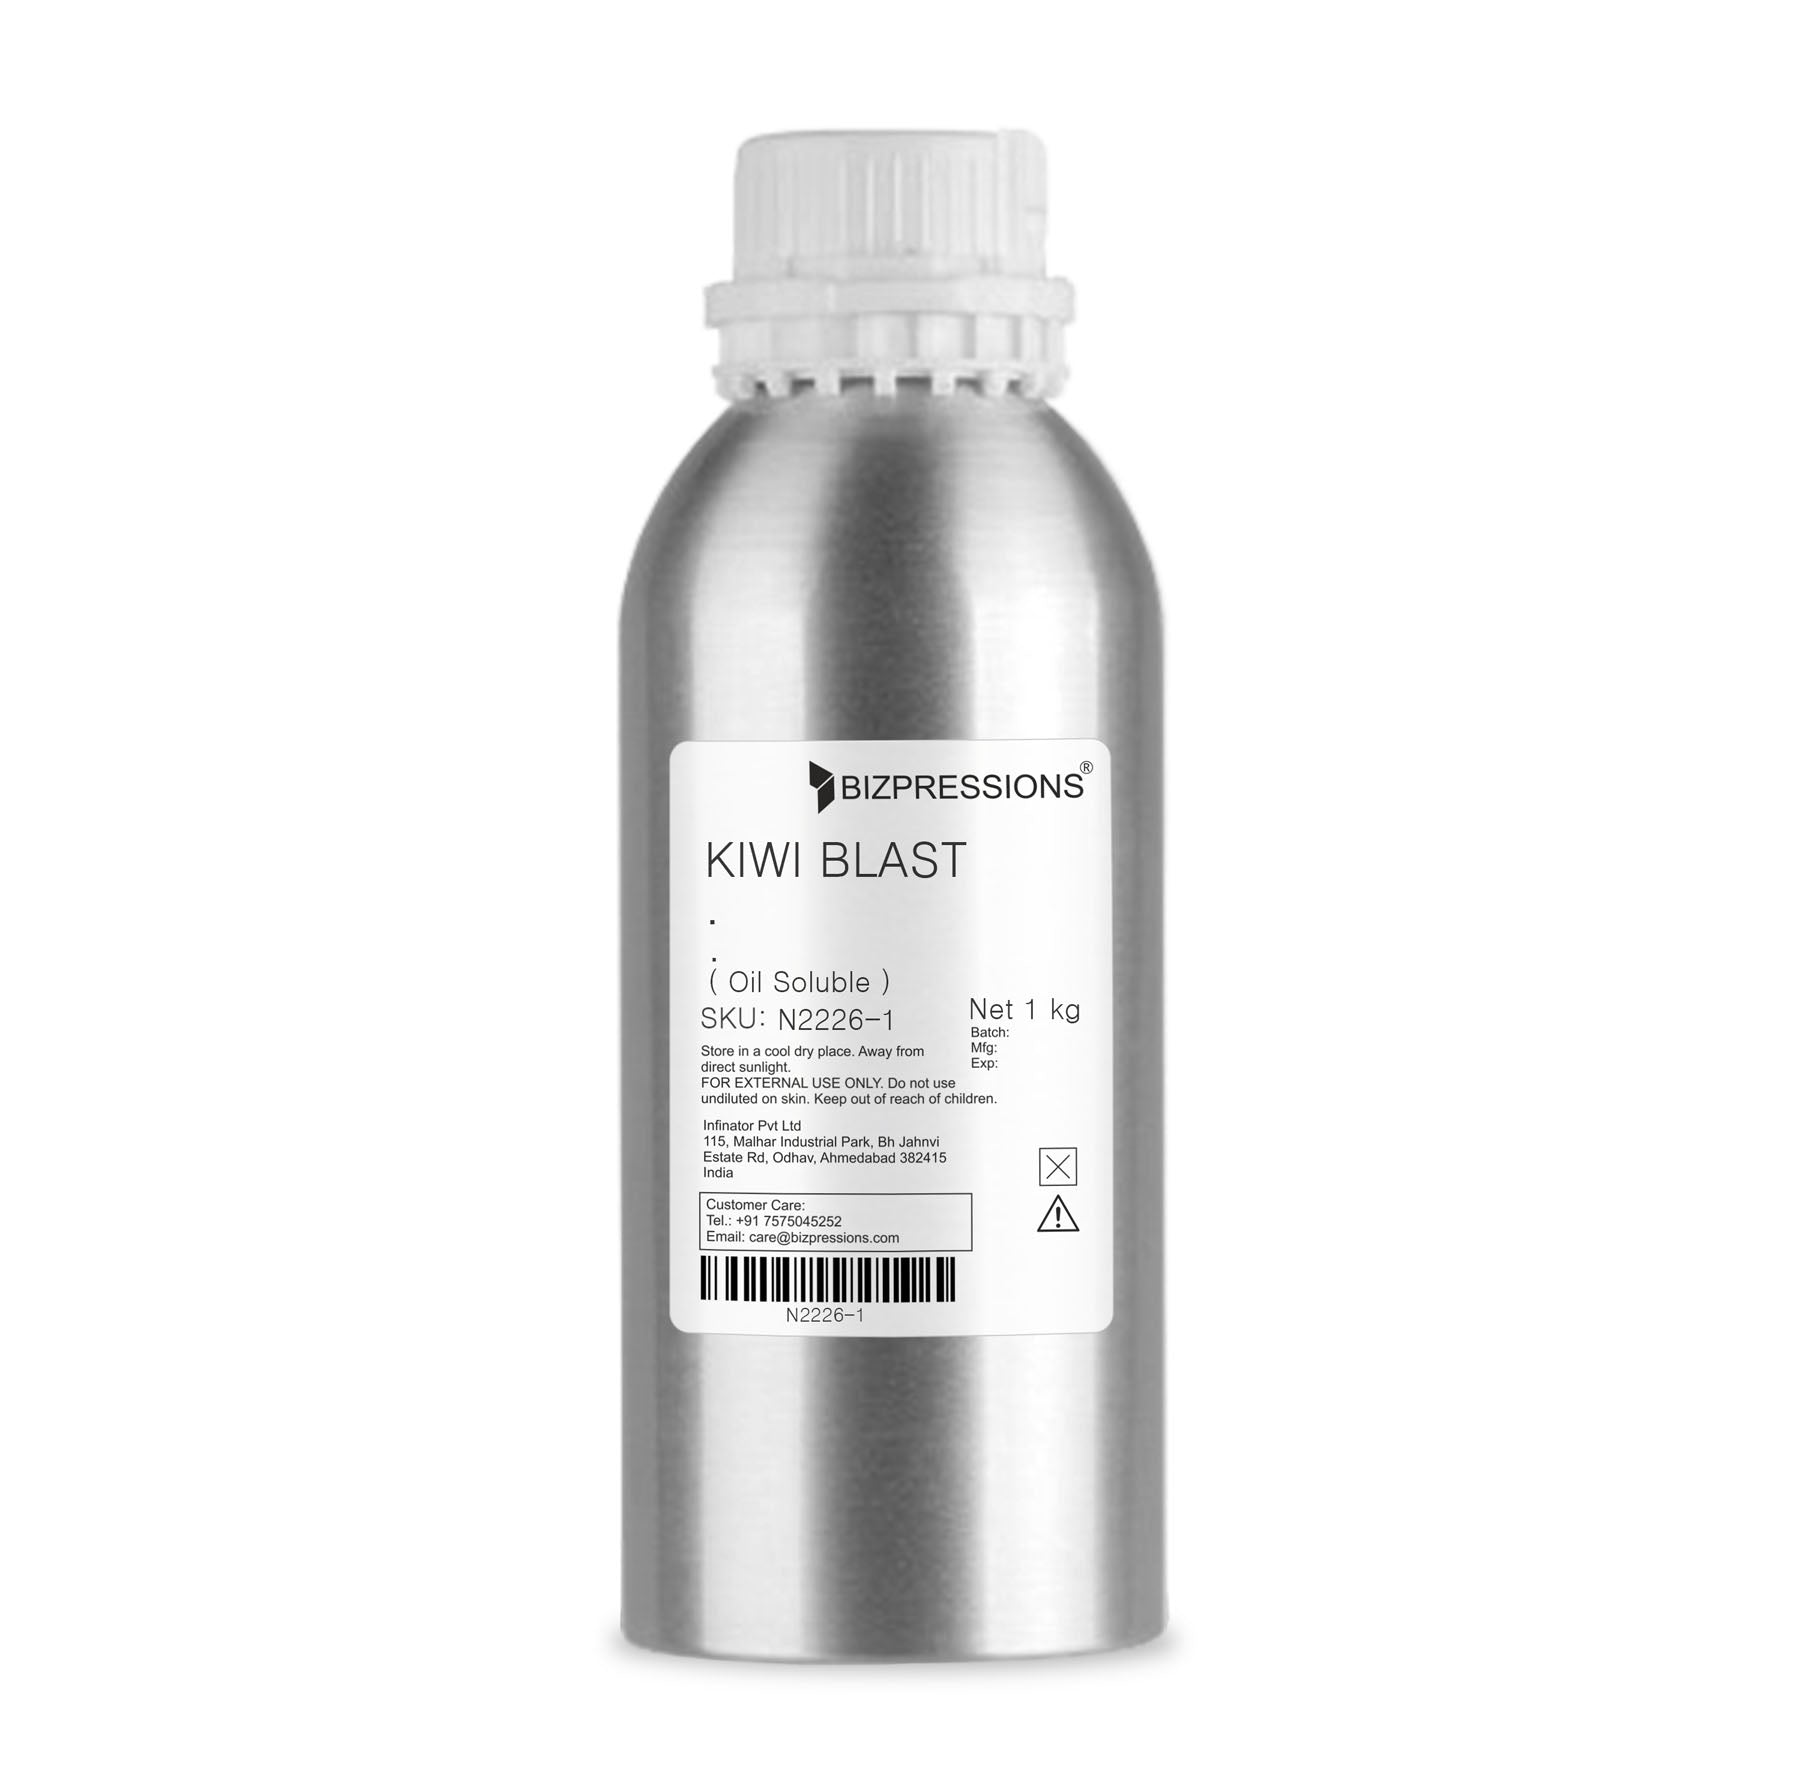 KIWI BLAST - Fragrance ( Oil Soluble ) - 1 kg